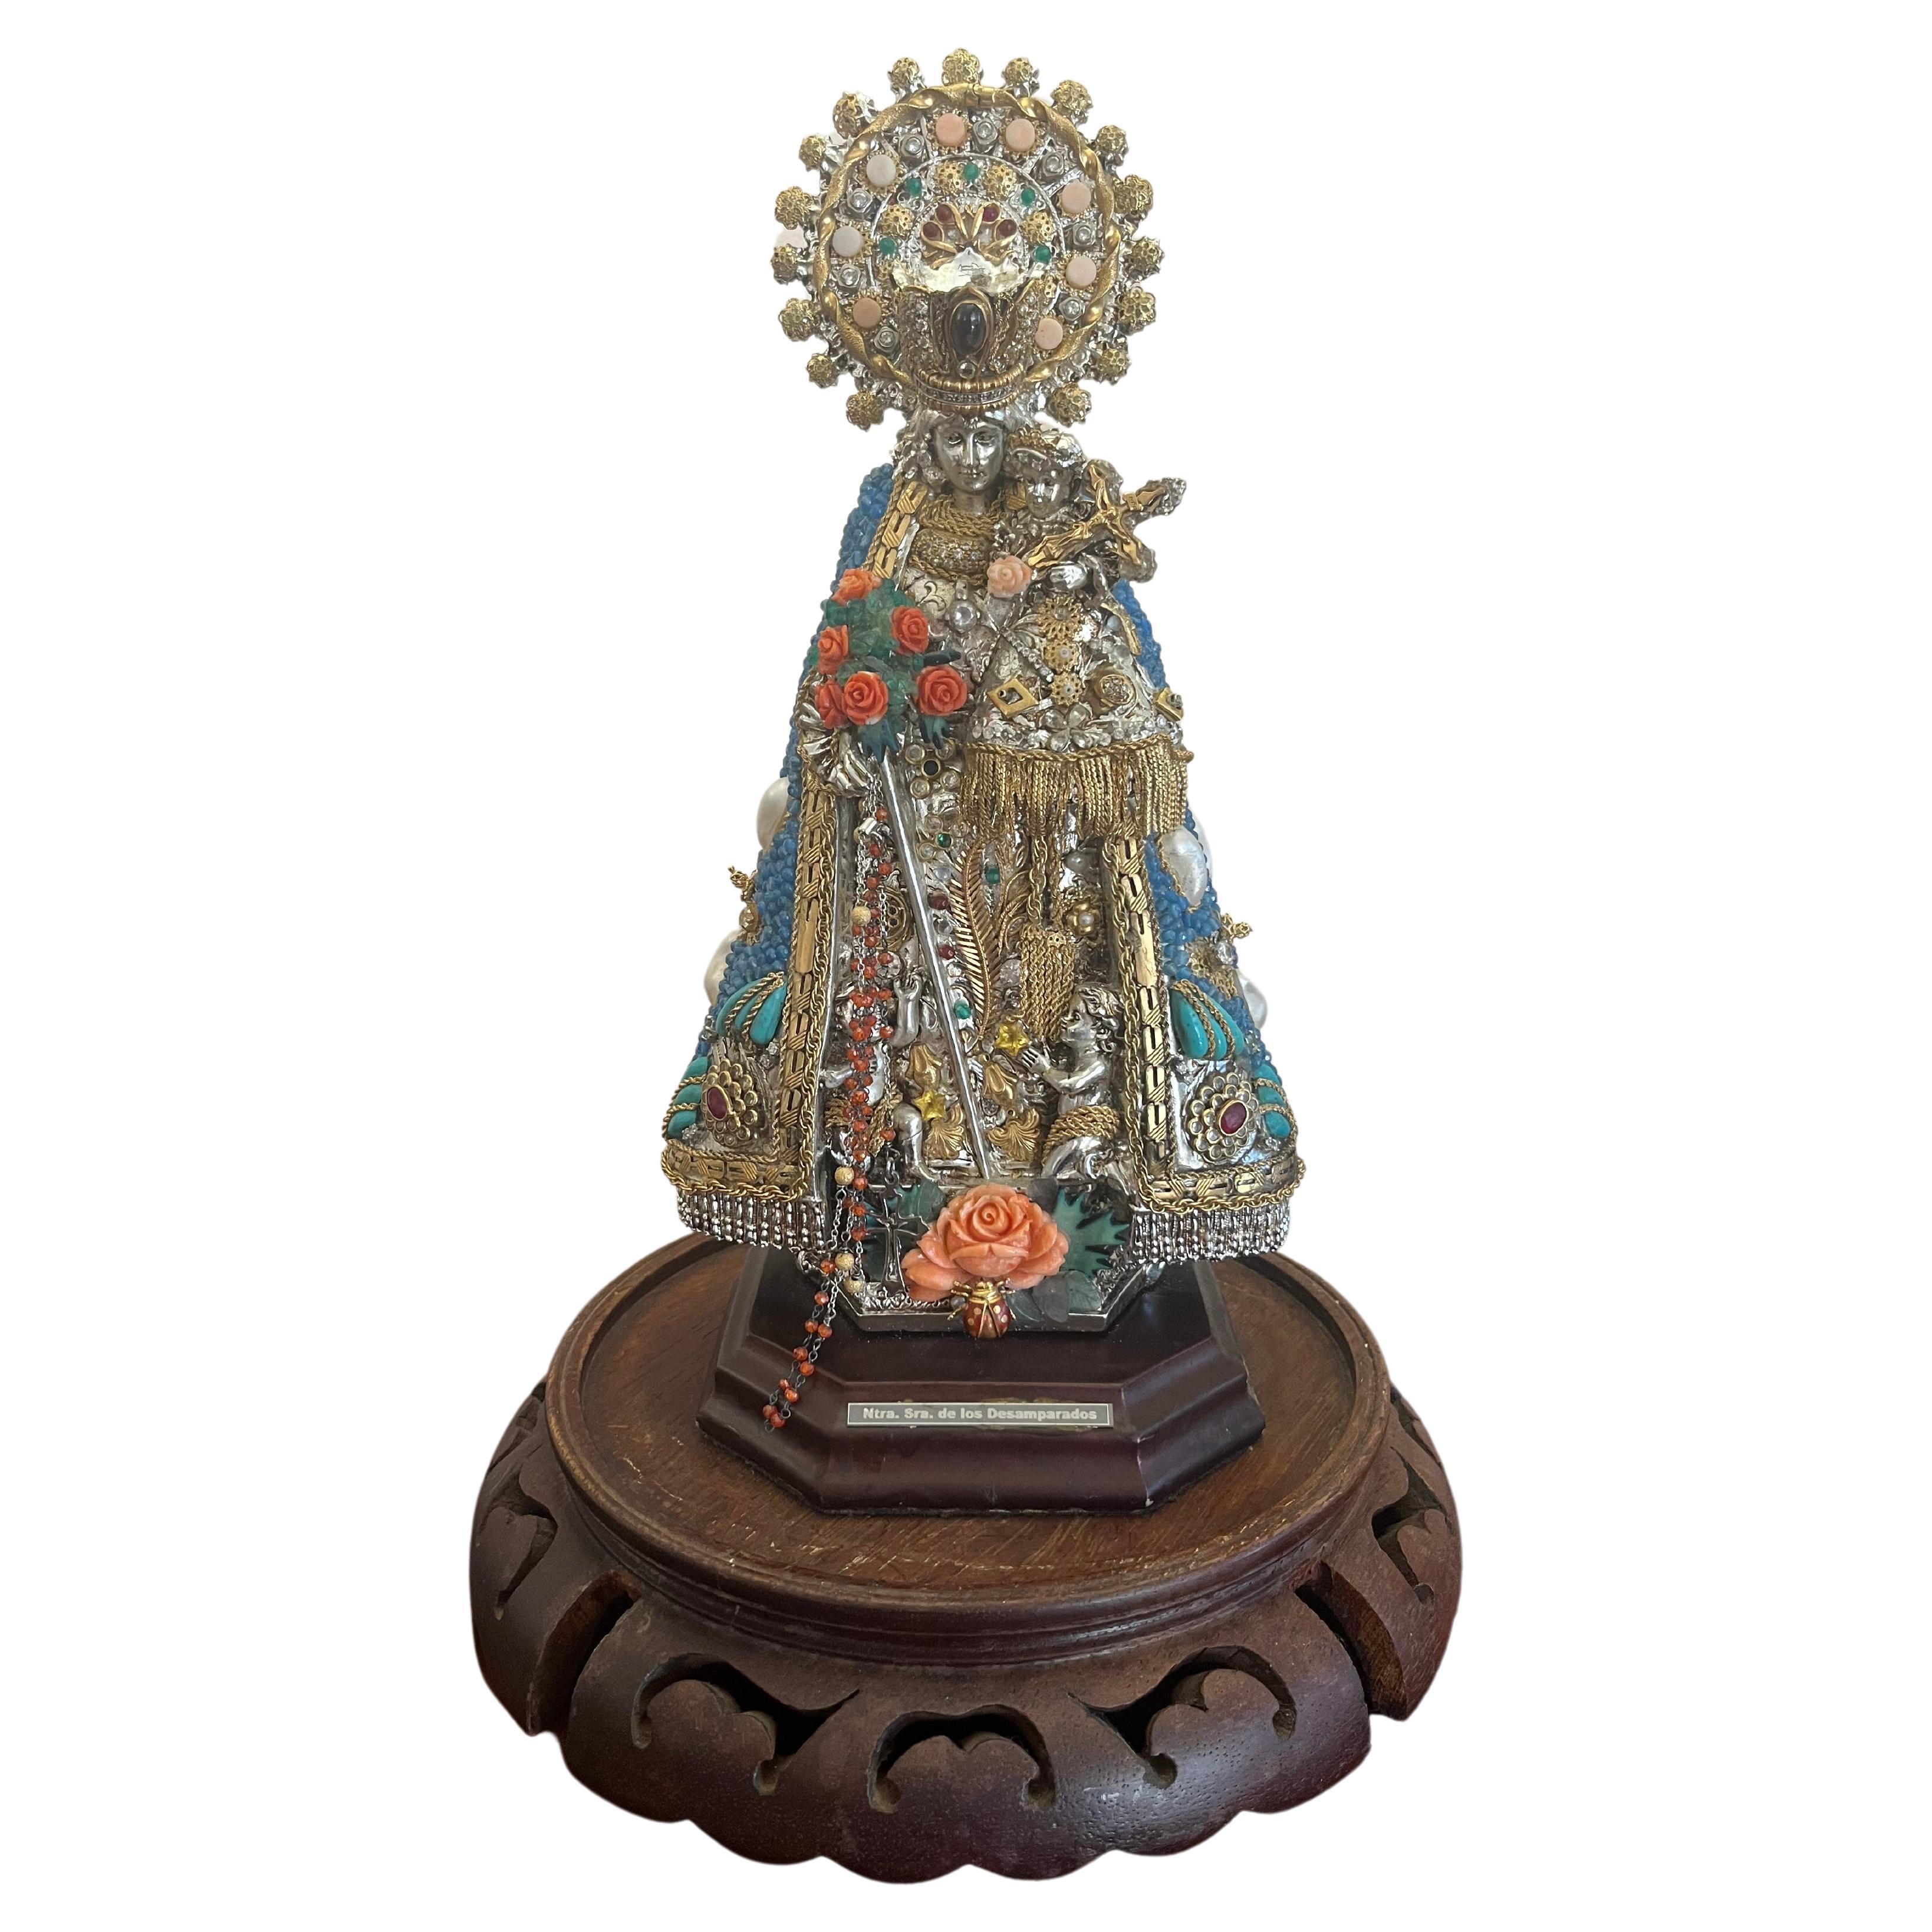 18kt Gold Statue De Nuestra Sra De Los Desamparados 'the Virgin of the Forsaken' For Sale